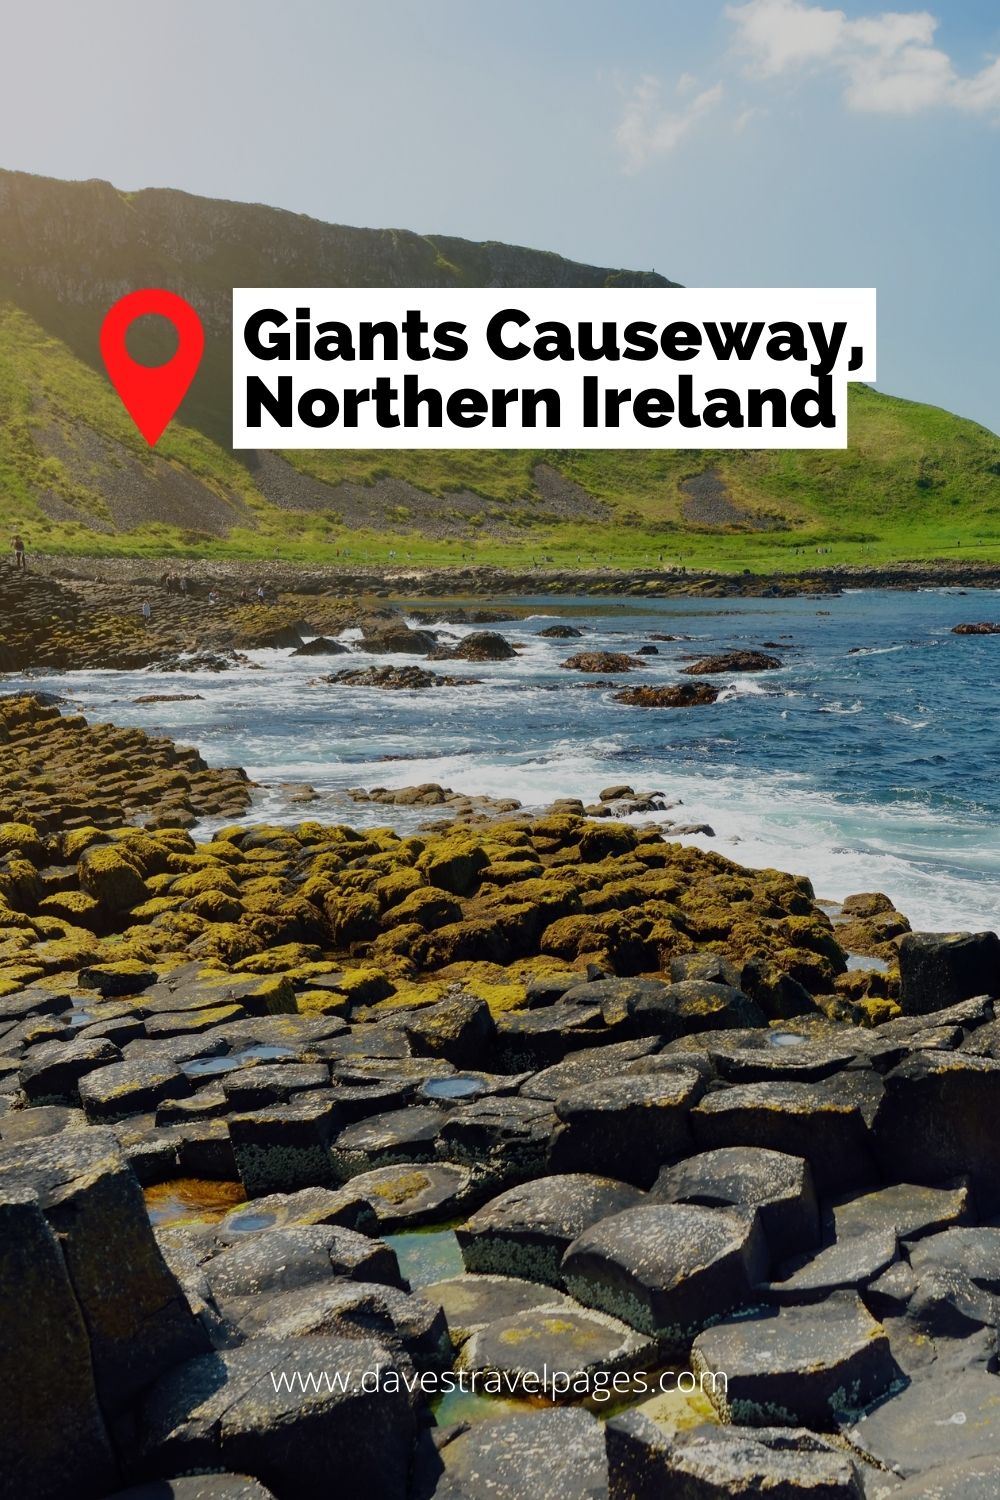 Giants Causeway, Northern Ireland